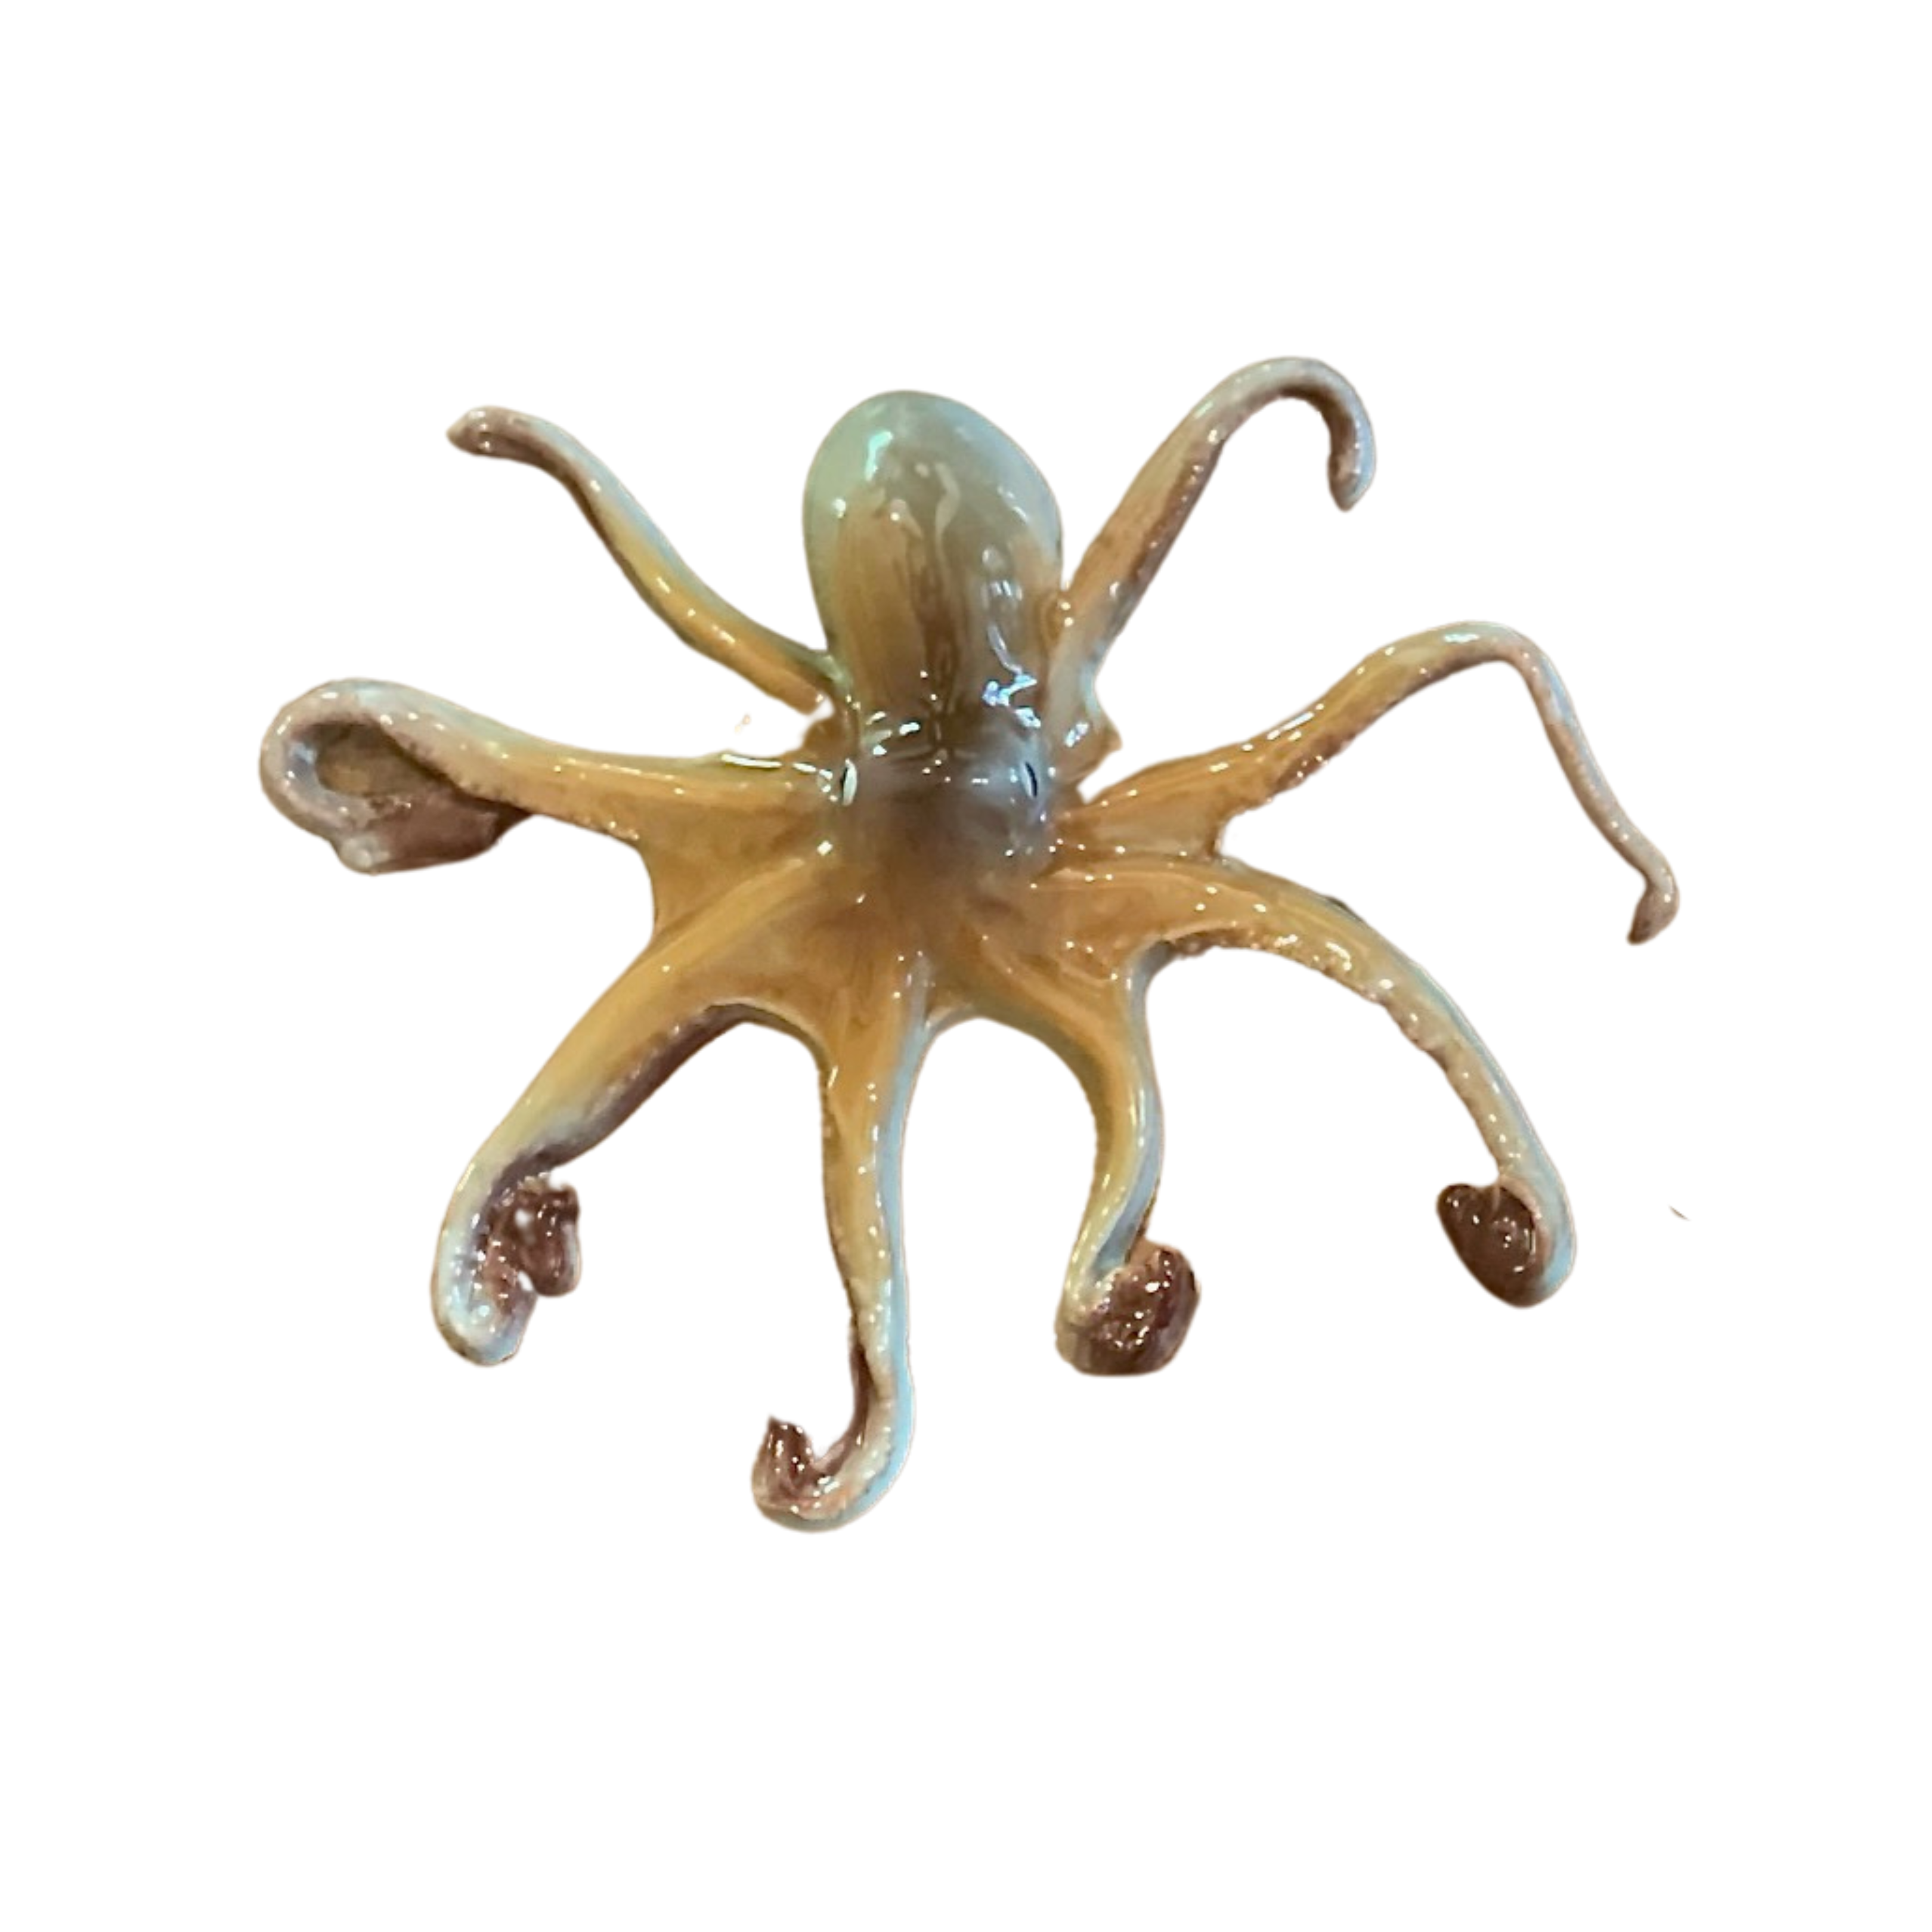 Polpo Medio - Medium Octopus – In Giro